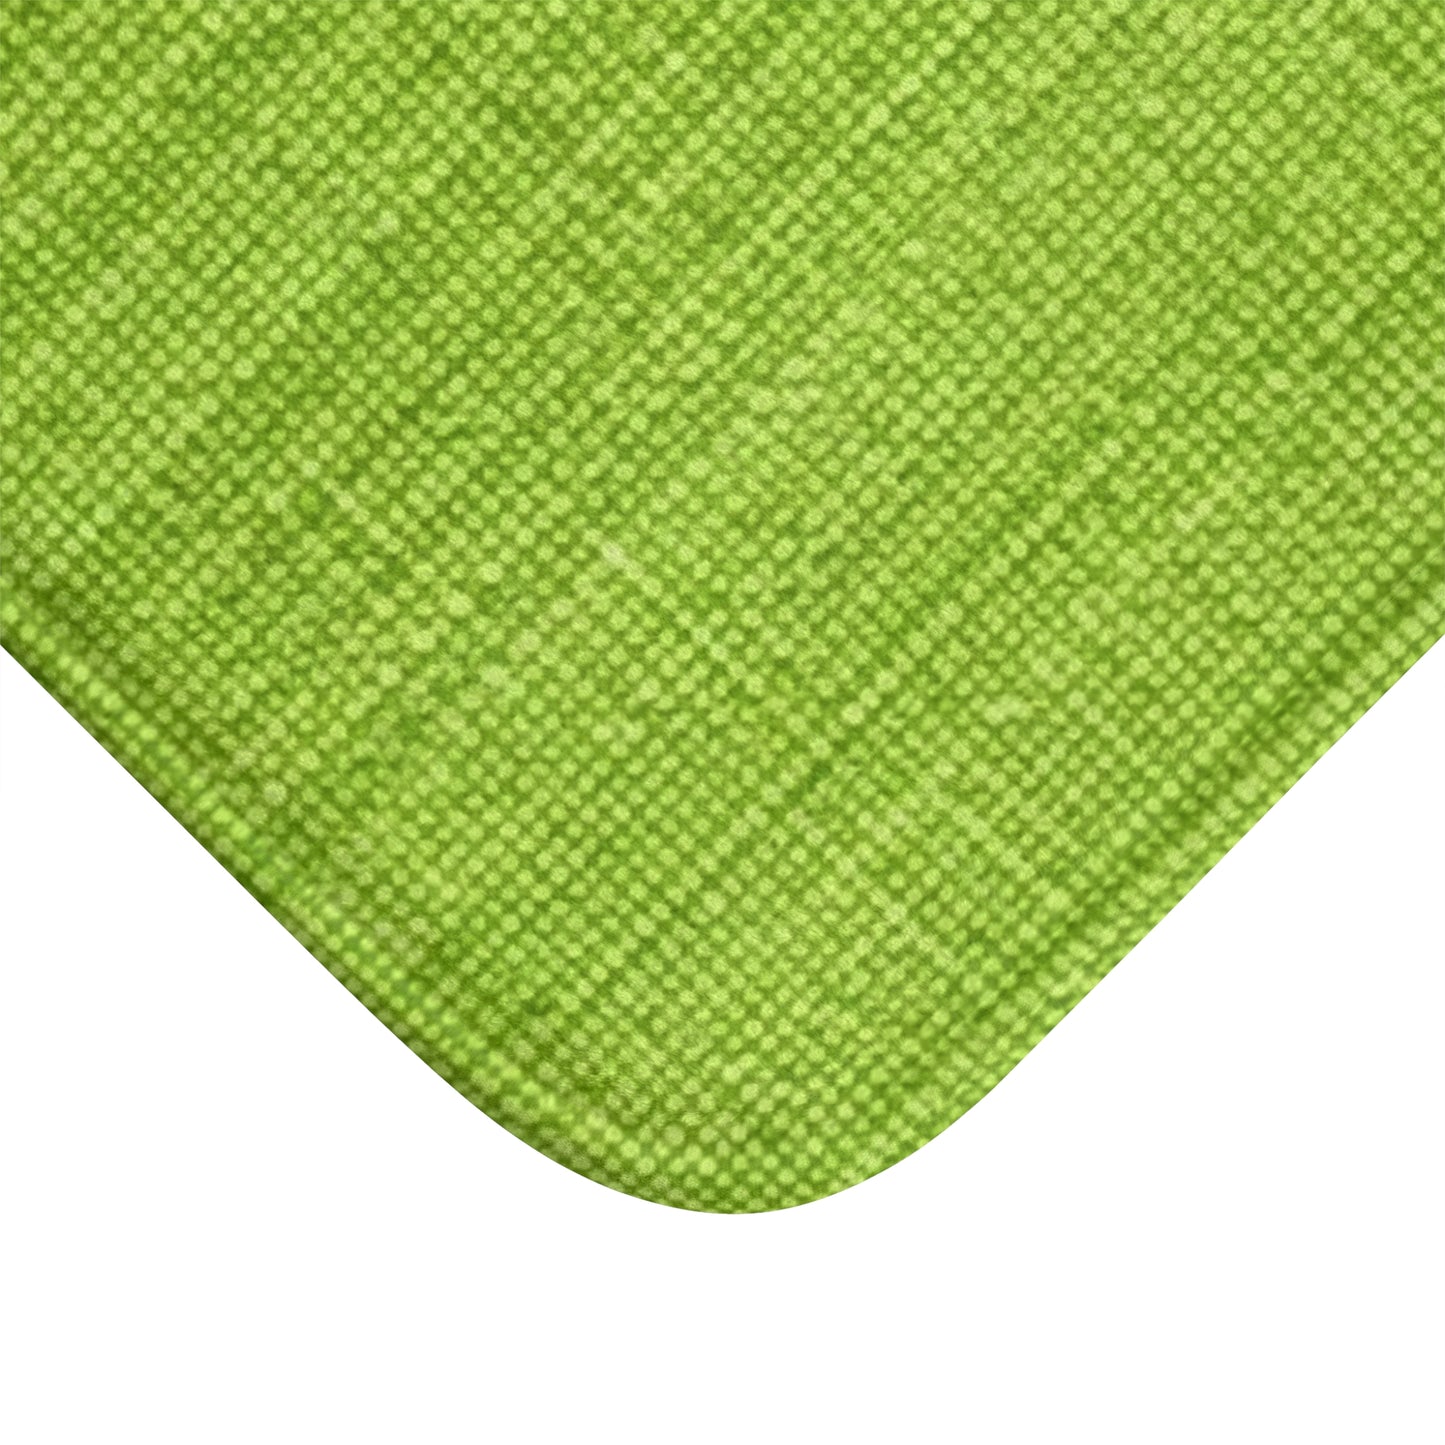 Lush Grass Neon Green: Denim-Inspired, Springtime Fabric Style - Bath Mat